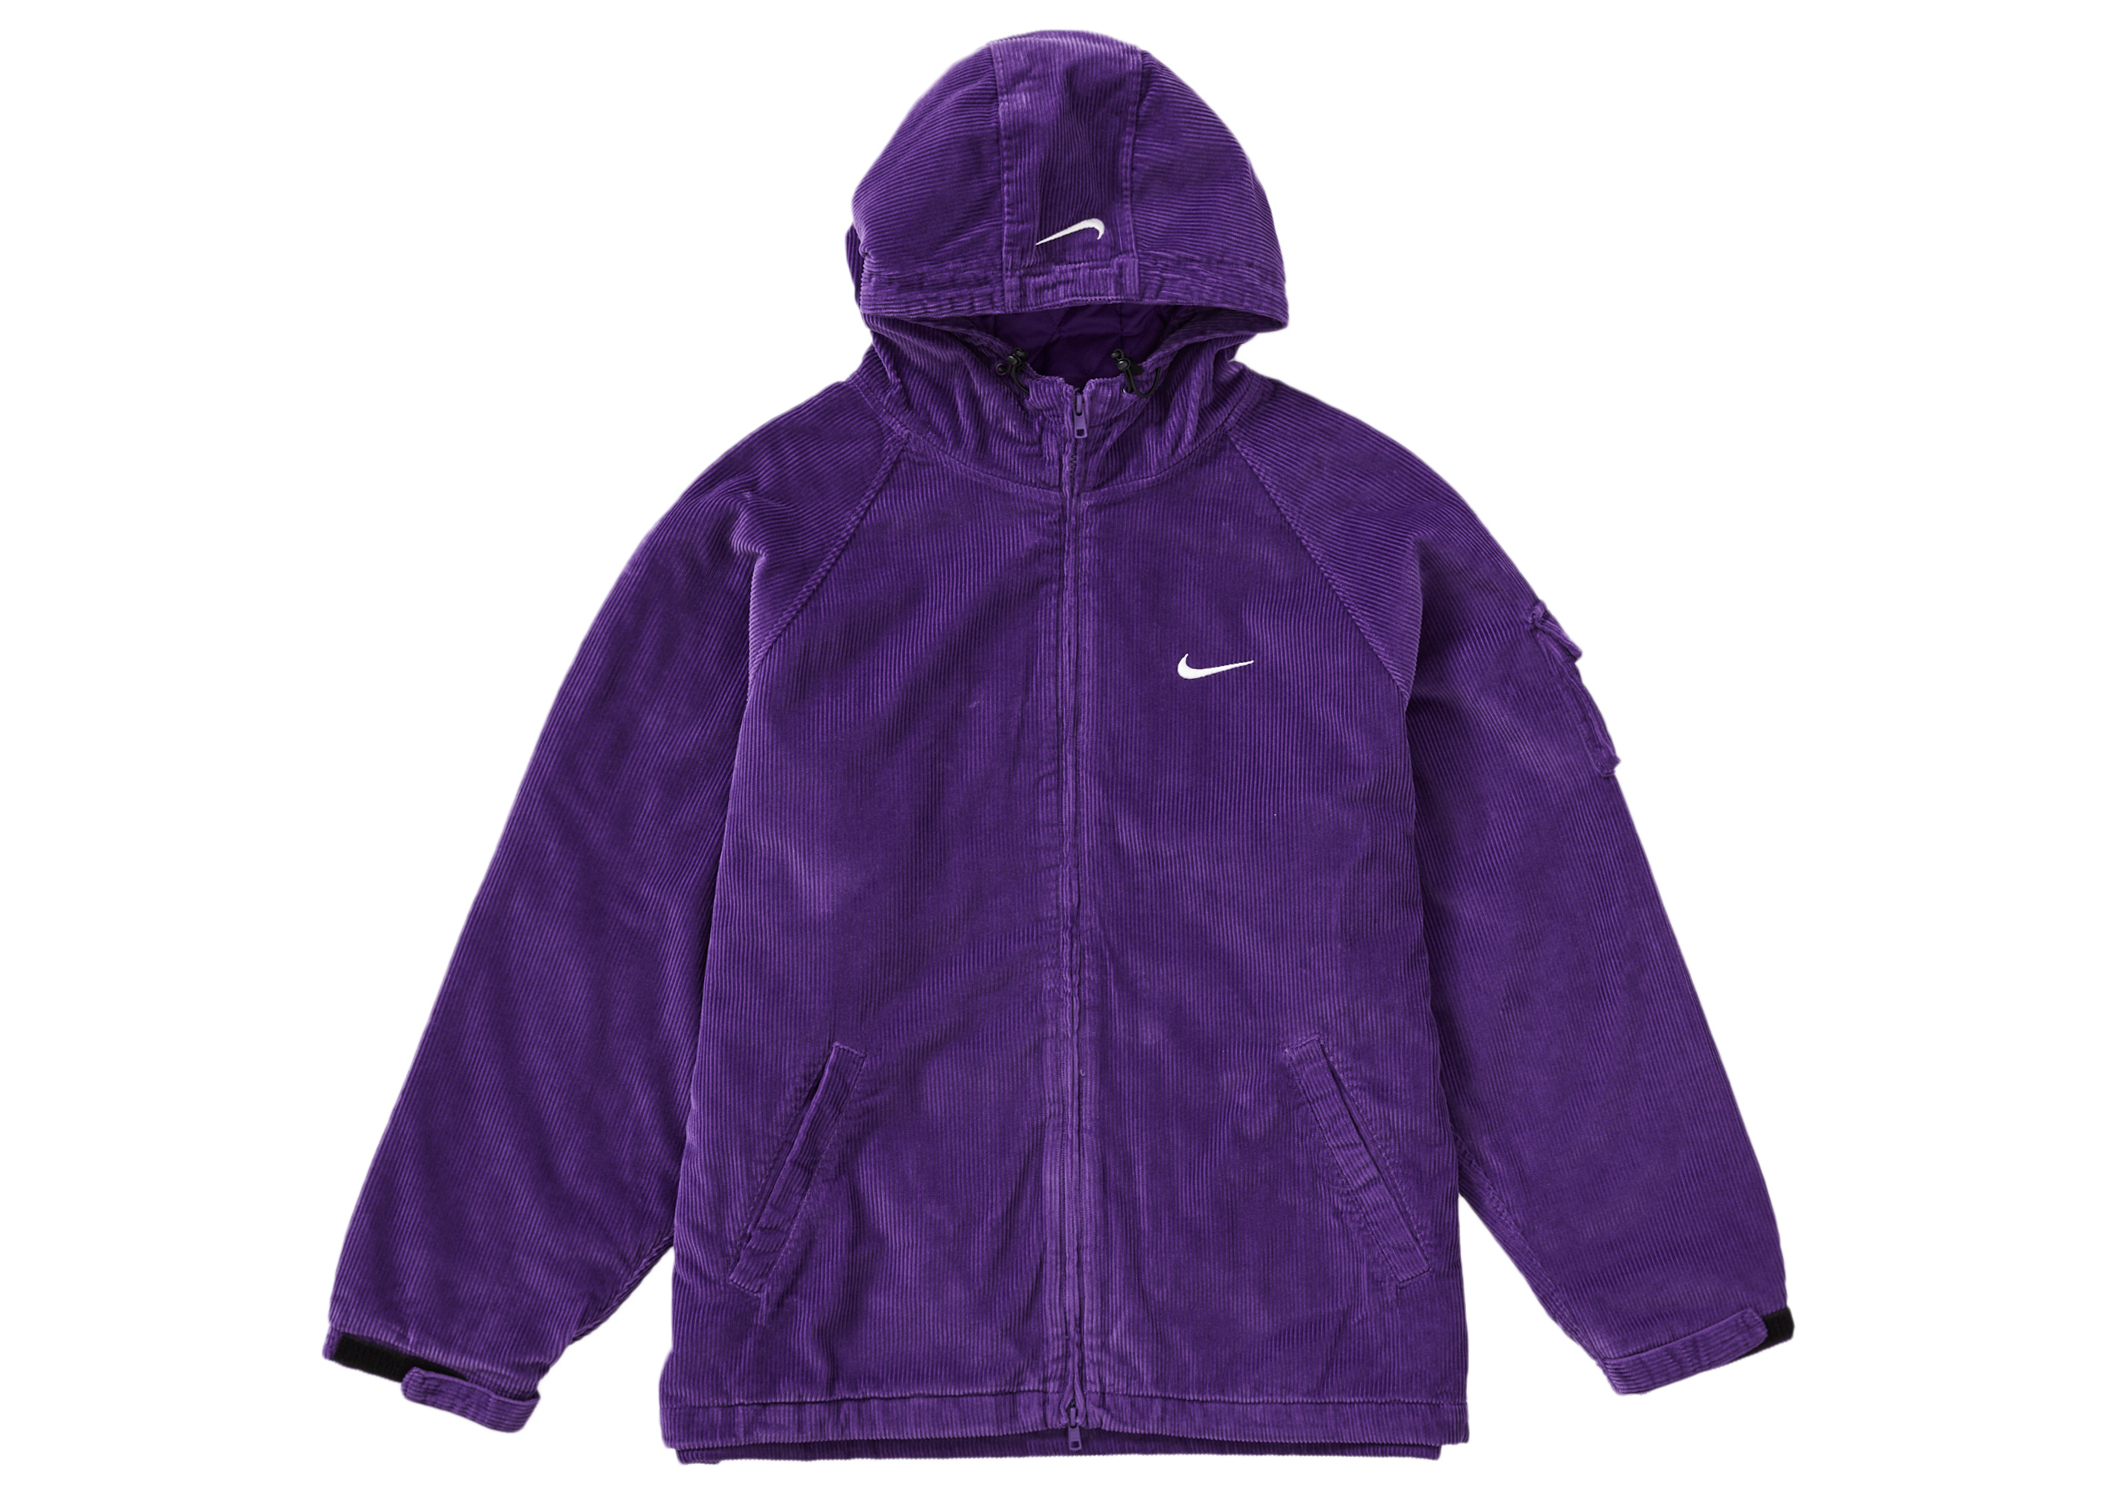 Chaqueta con capucha Supreme Nike Arc de pana en violeta Hombre 